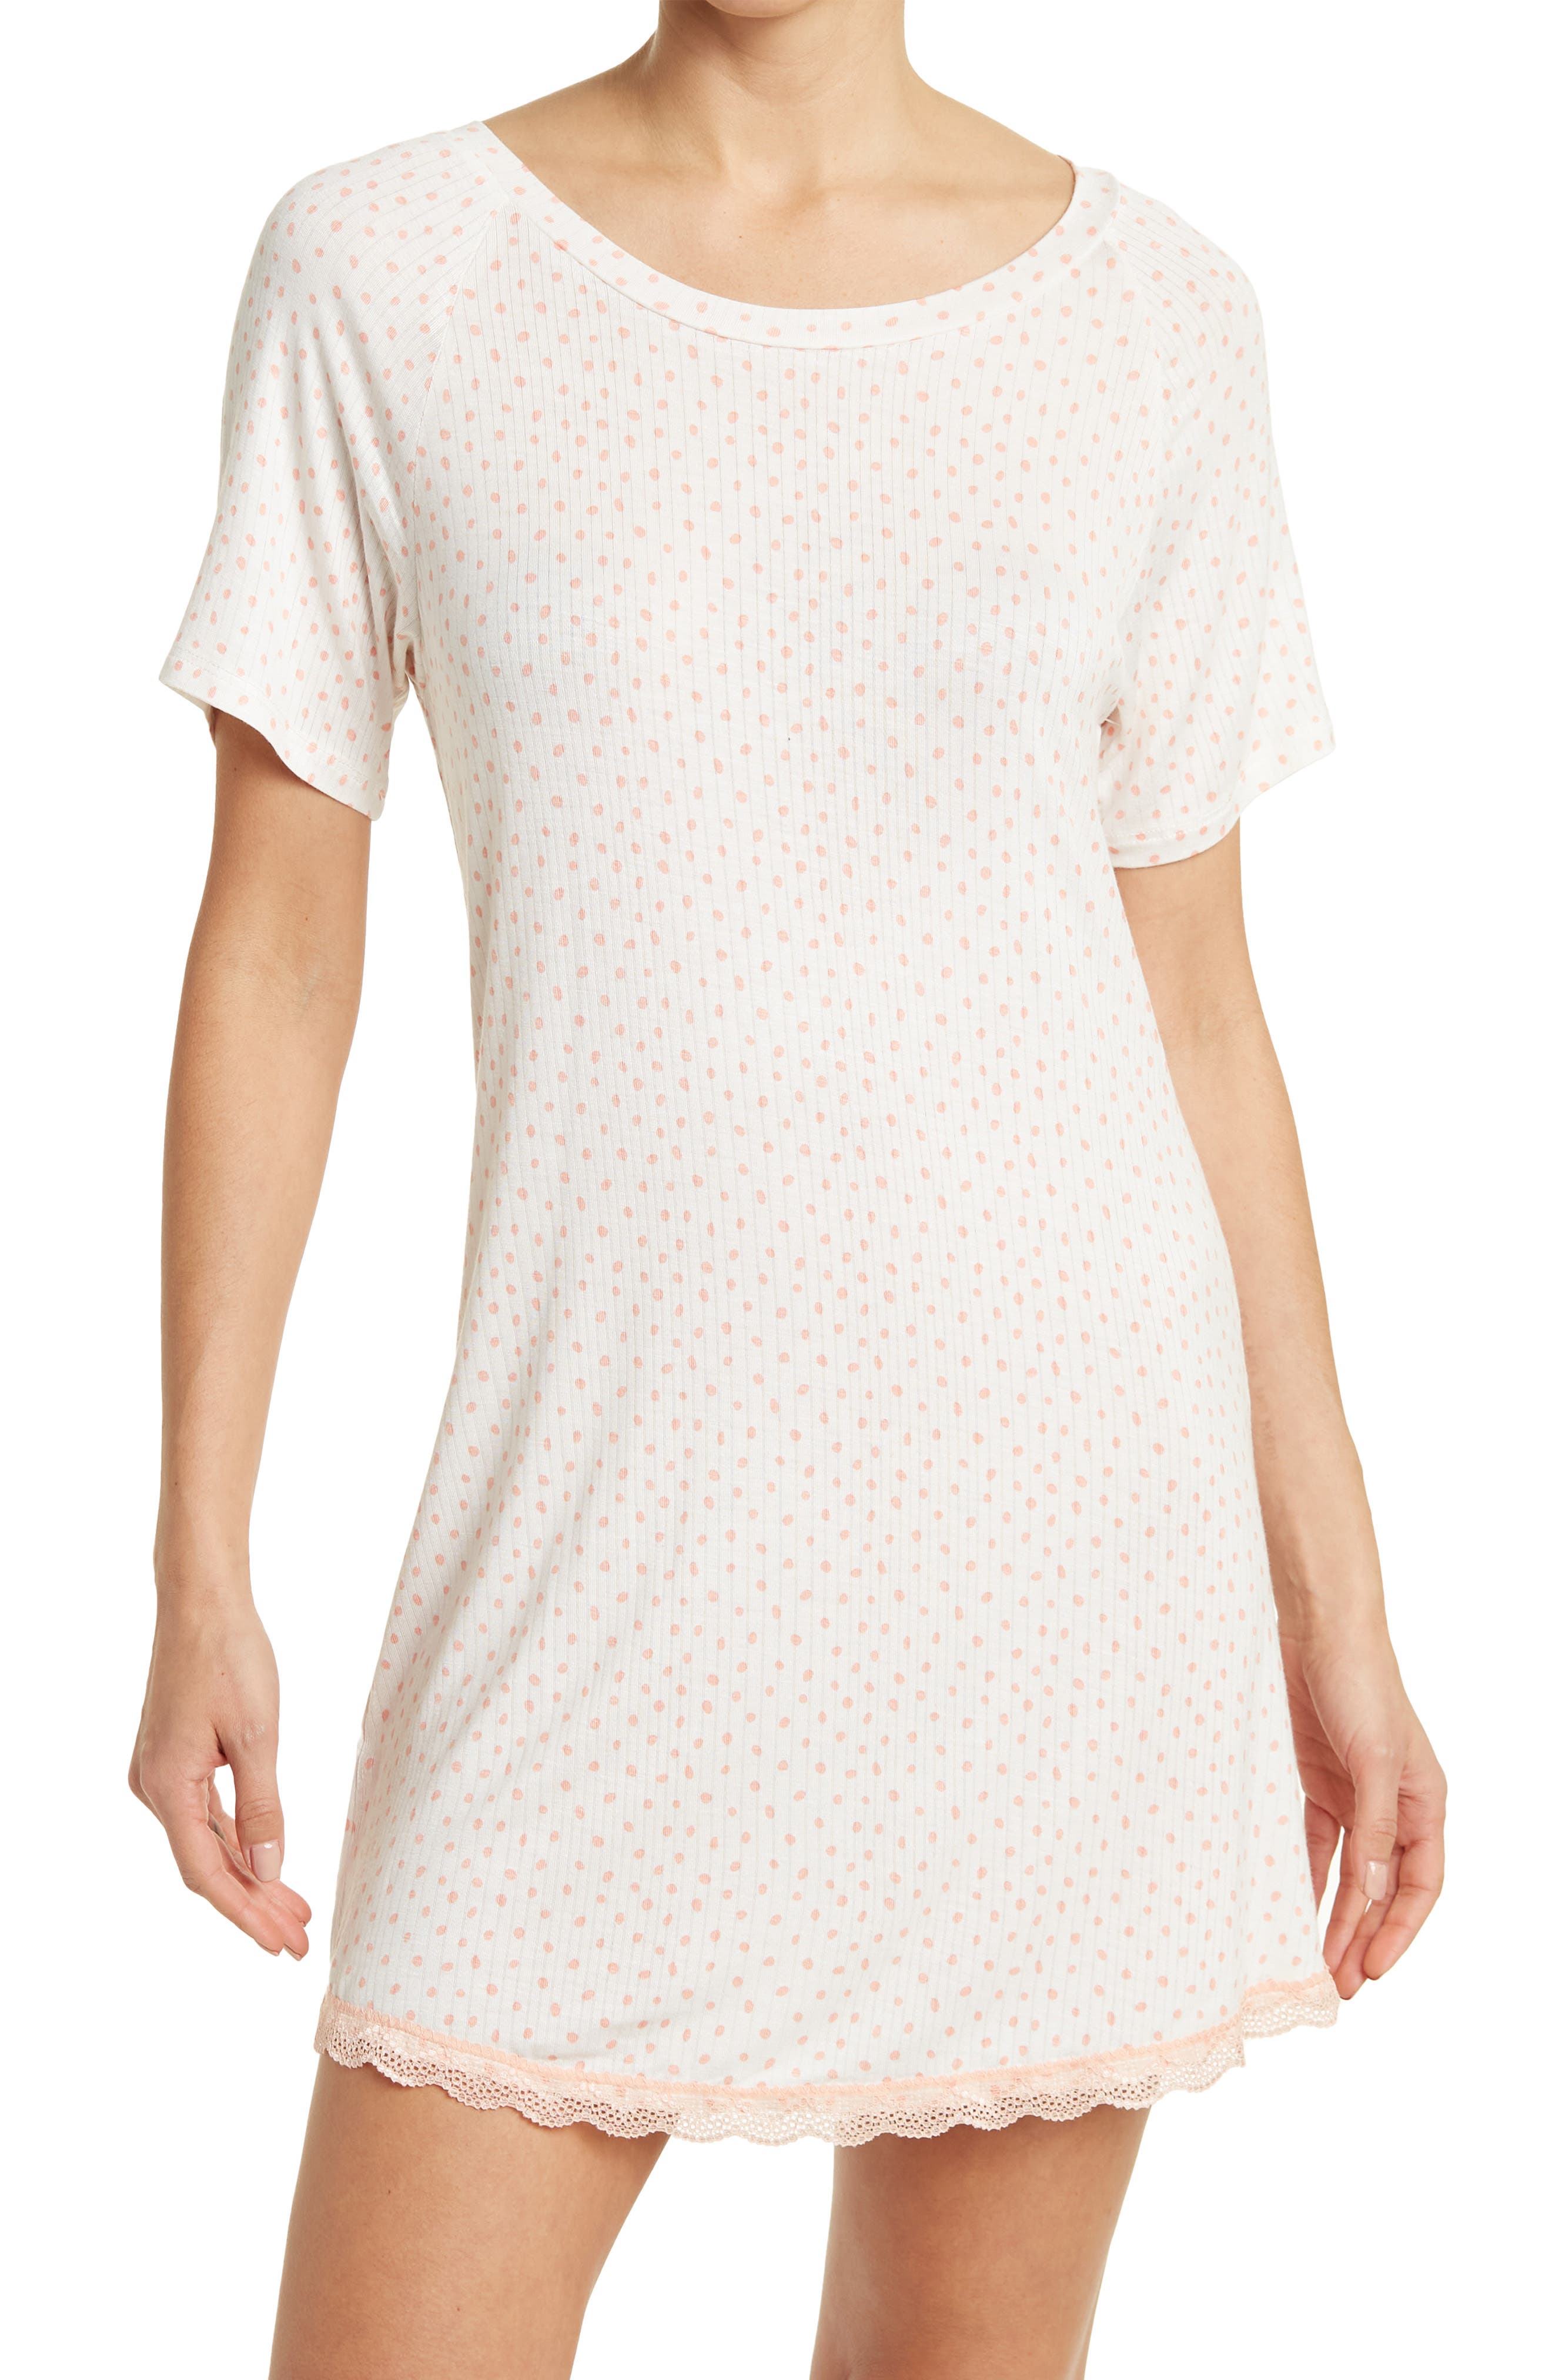 ANGEDEVI Women's Cotton Soft Sleep Shirts,Crew Neck Short Sleeve Nightgowns Nightshirt,Comfy Sleepwear S-4XL 